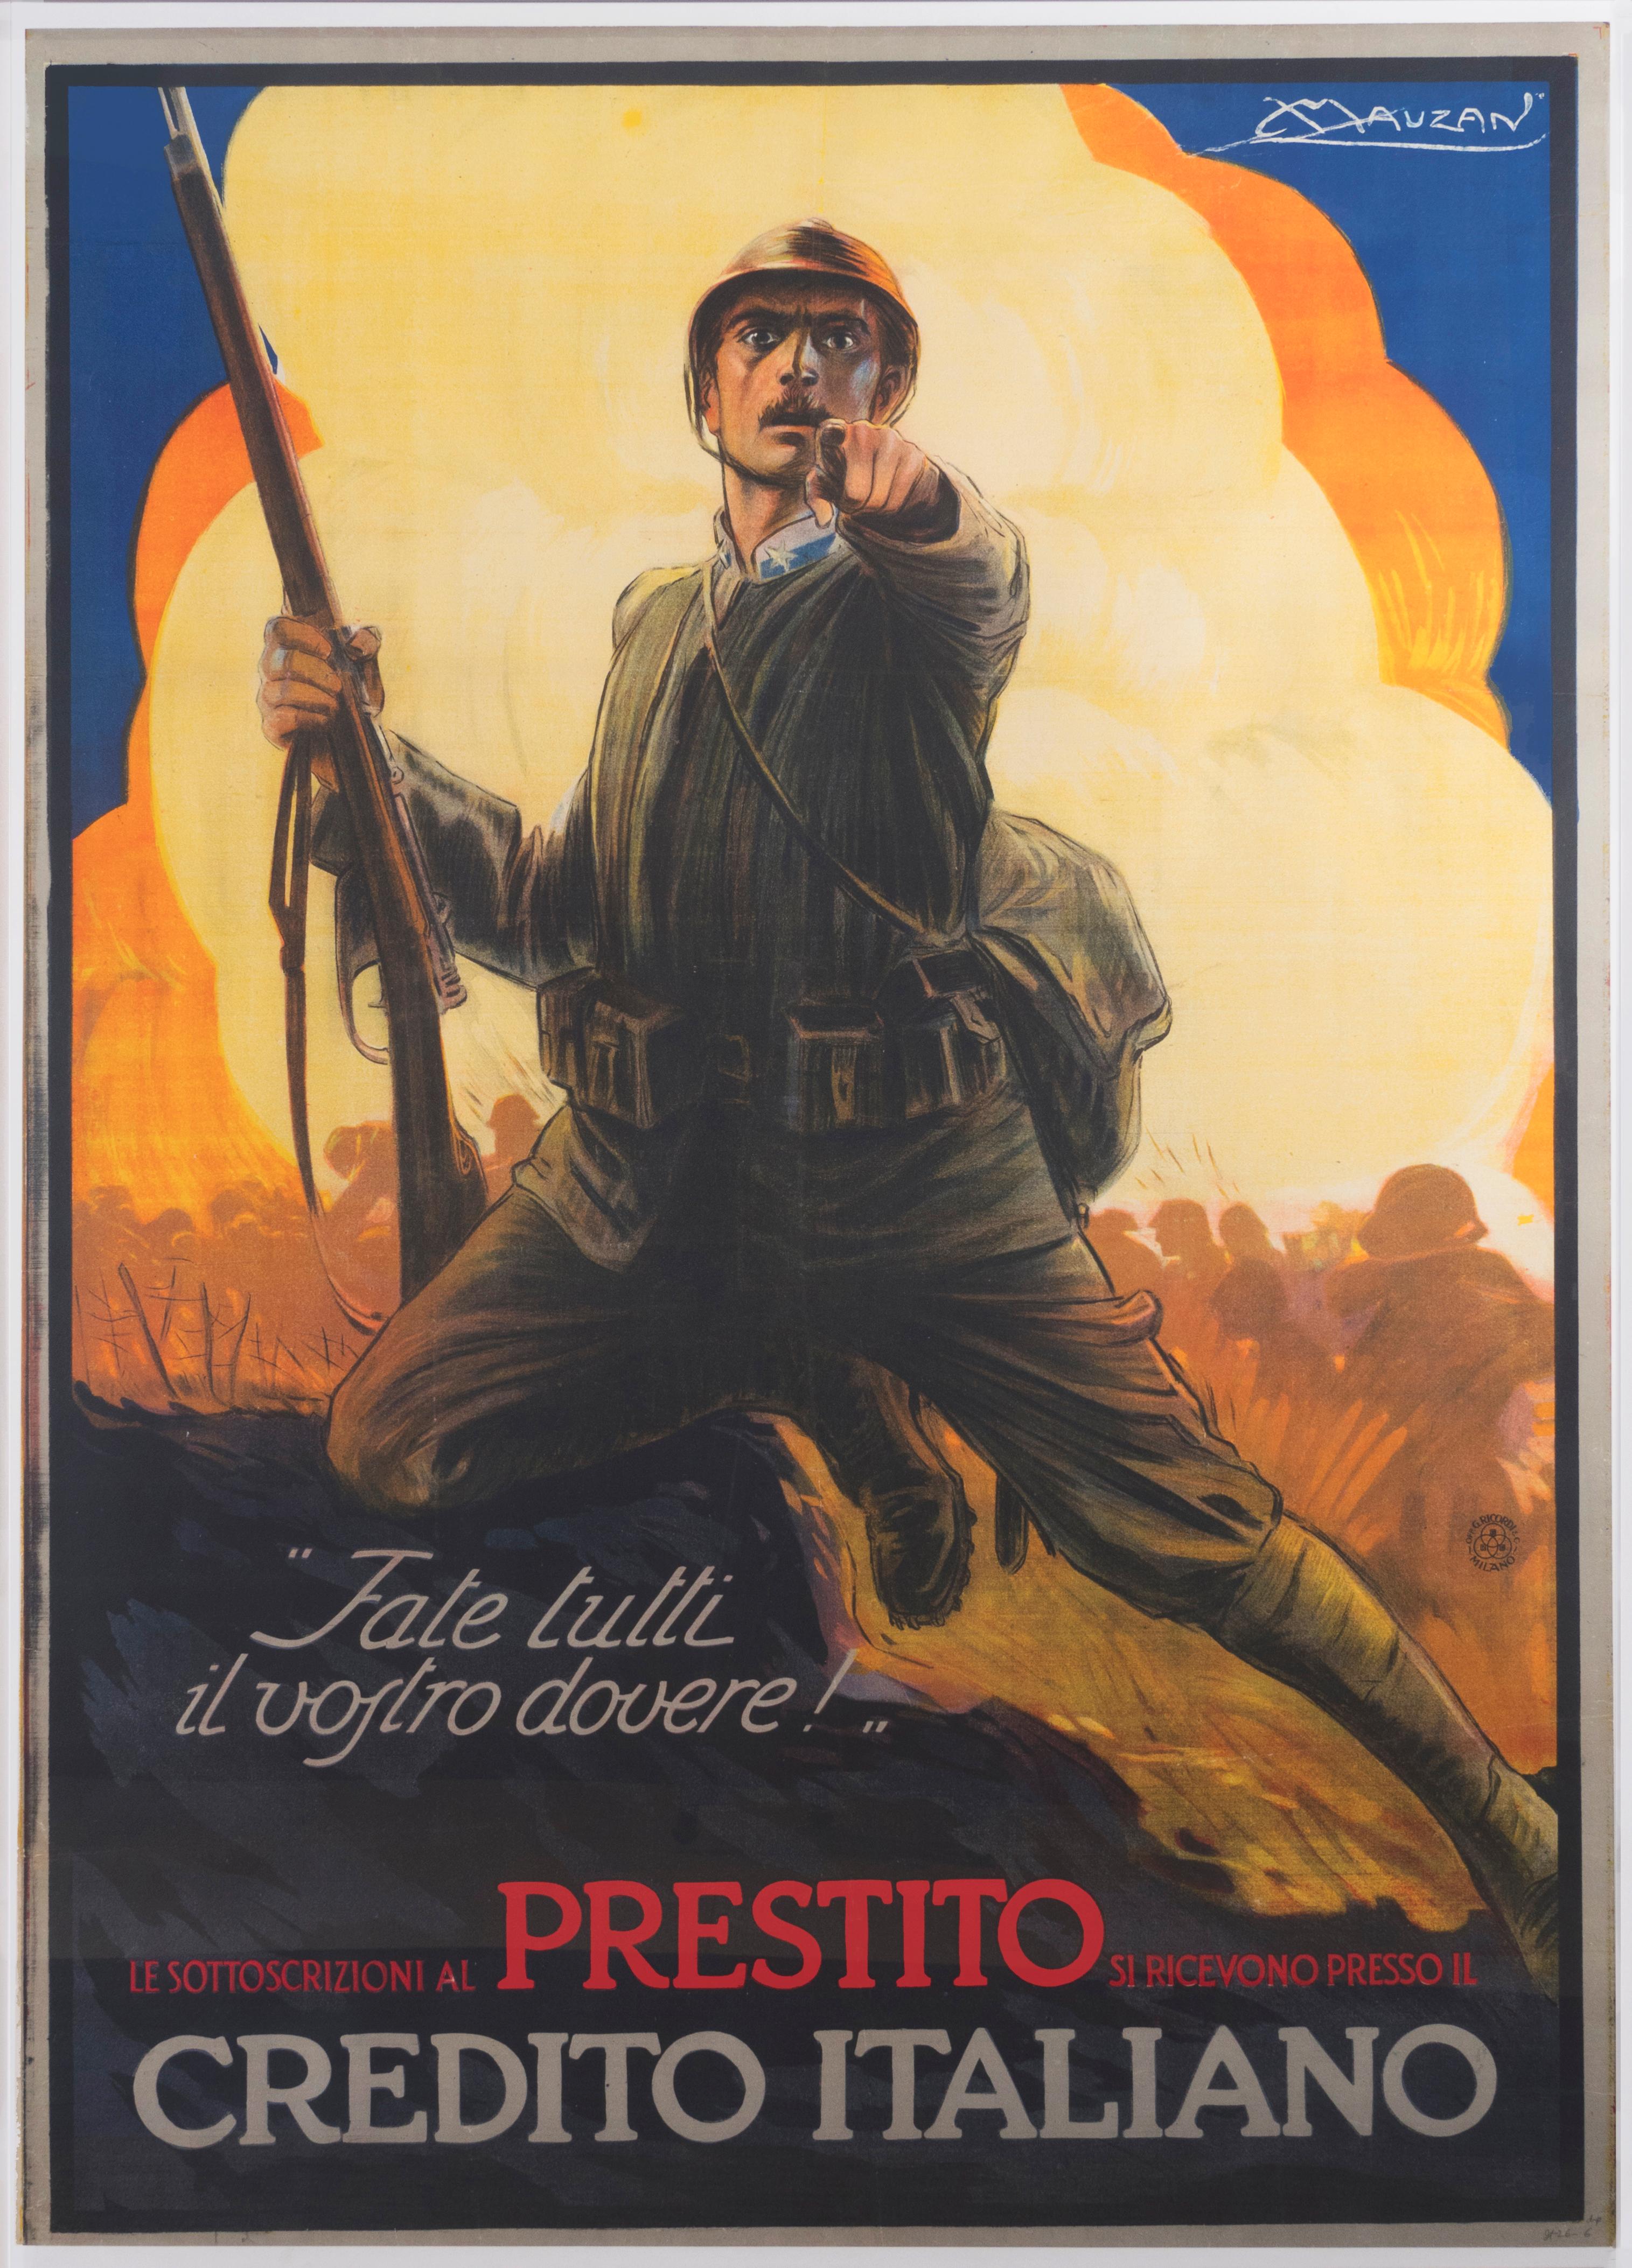 "Do your duty!" Original Vintage Italian 1917 WW1 Recruiting Poster by Mauzan - Print by Achille Luciano Mauzan